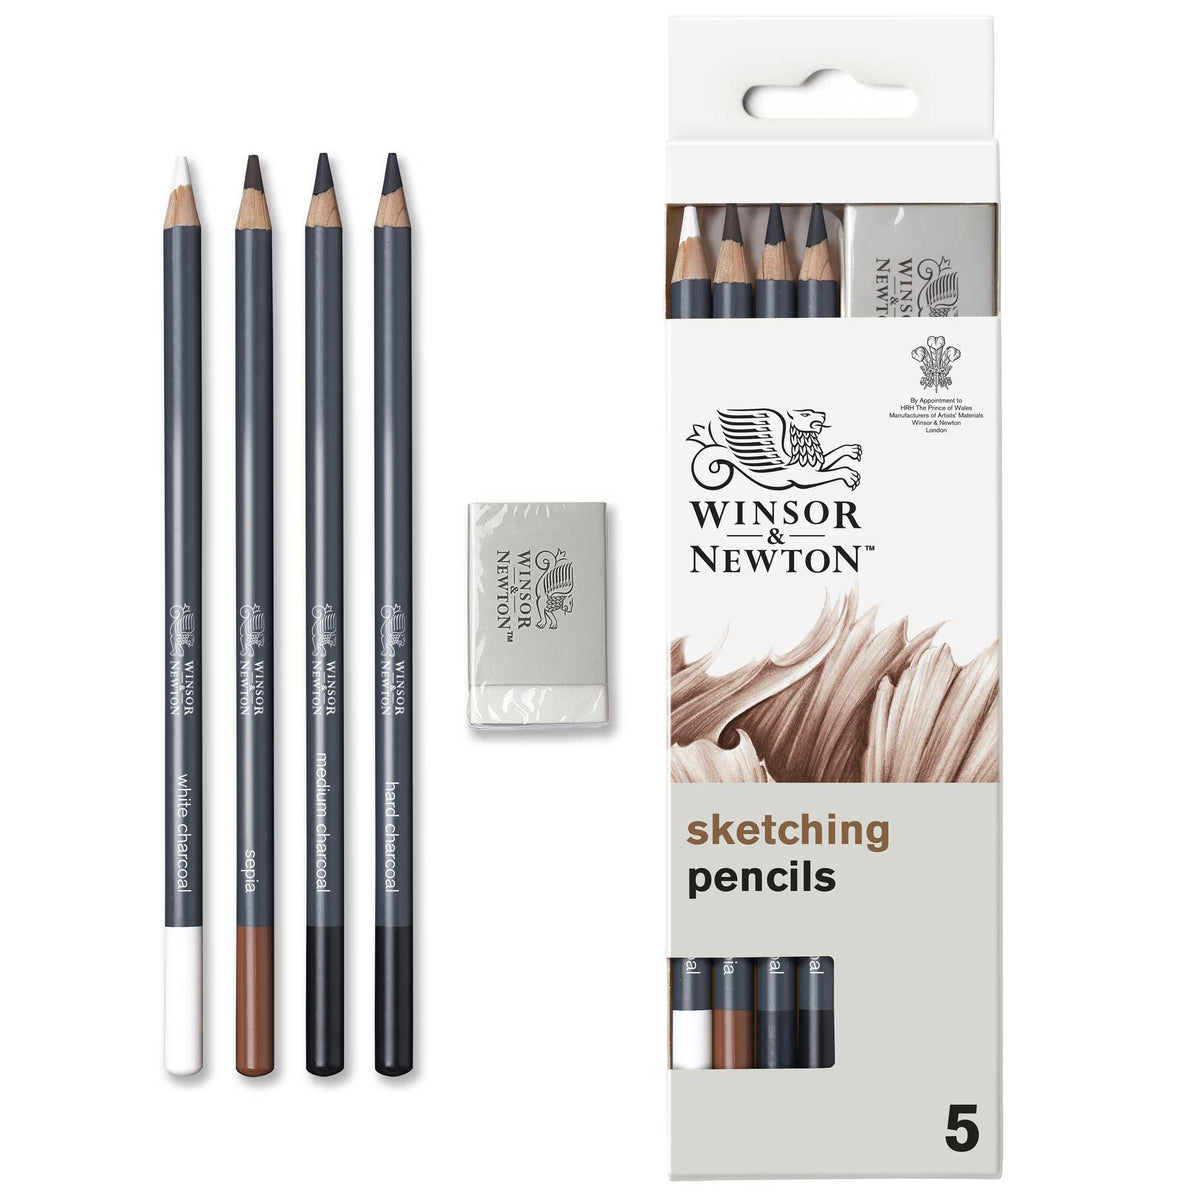 Winsor &amp; Newton Studio Collection Sketching pencils - Set of 5